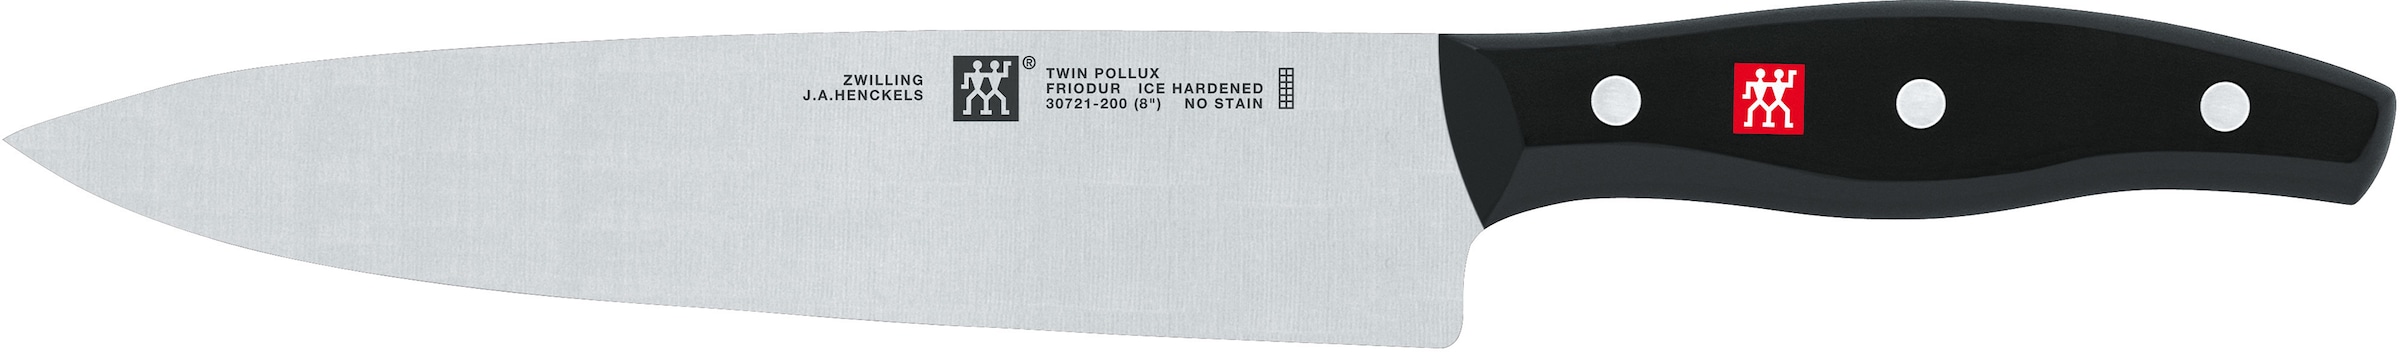 Zwilling Topf-Set »Focus/Twin Pollux«, Edelstahl, (Set, 6 tlg., 1x Bratentopf 20 cm, 1x Kochtopf 24 cm, 1x Stieltopf 16 cm), Edelstahl, beschichtet, Induktion, inkl. 3-teiligem Kochmesser-Set